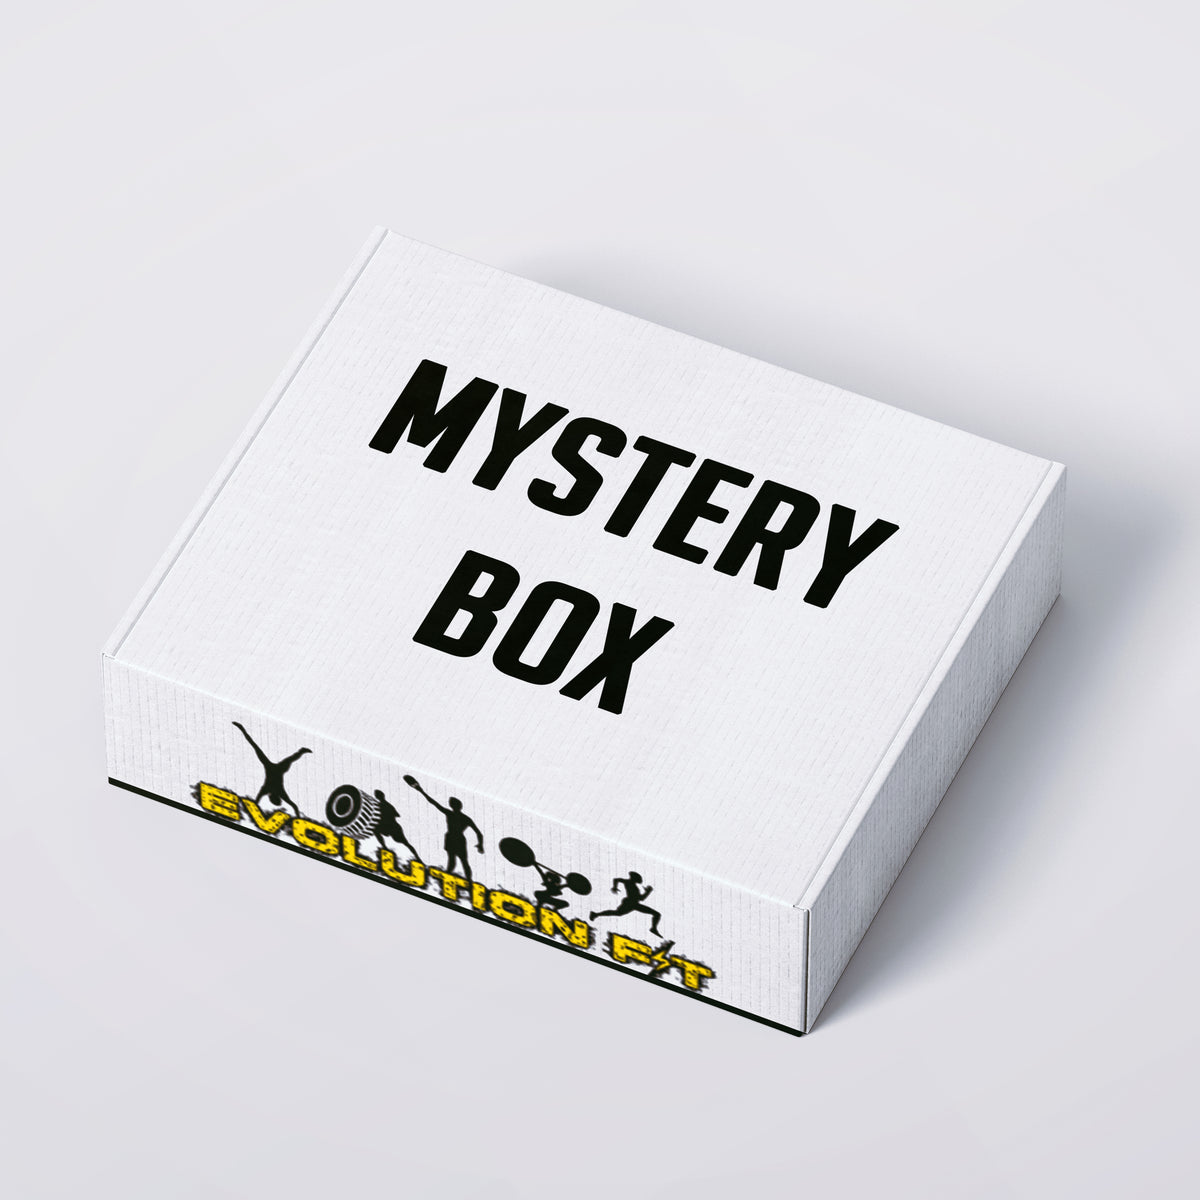 Mystery Box: Evolution - Apps on Google Play